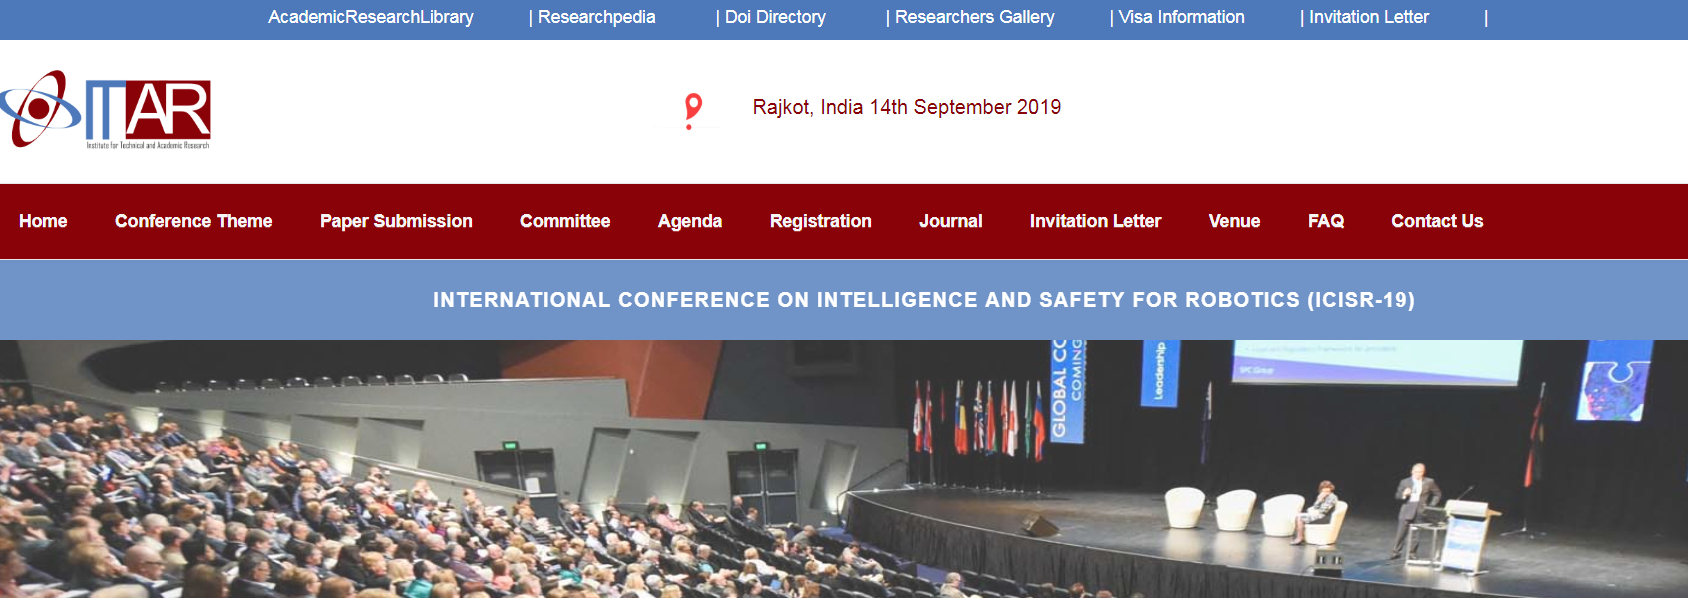 International Conference on Intelligence and Safety for Robotics (ICISR-19), Rajkot, Gujarat, India